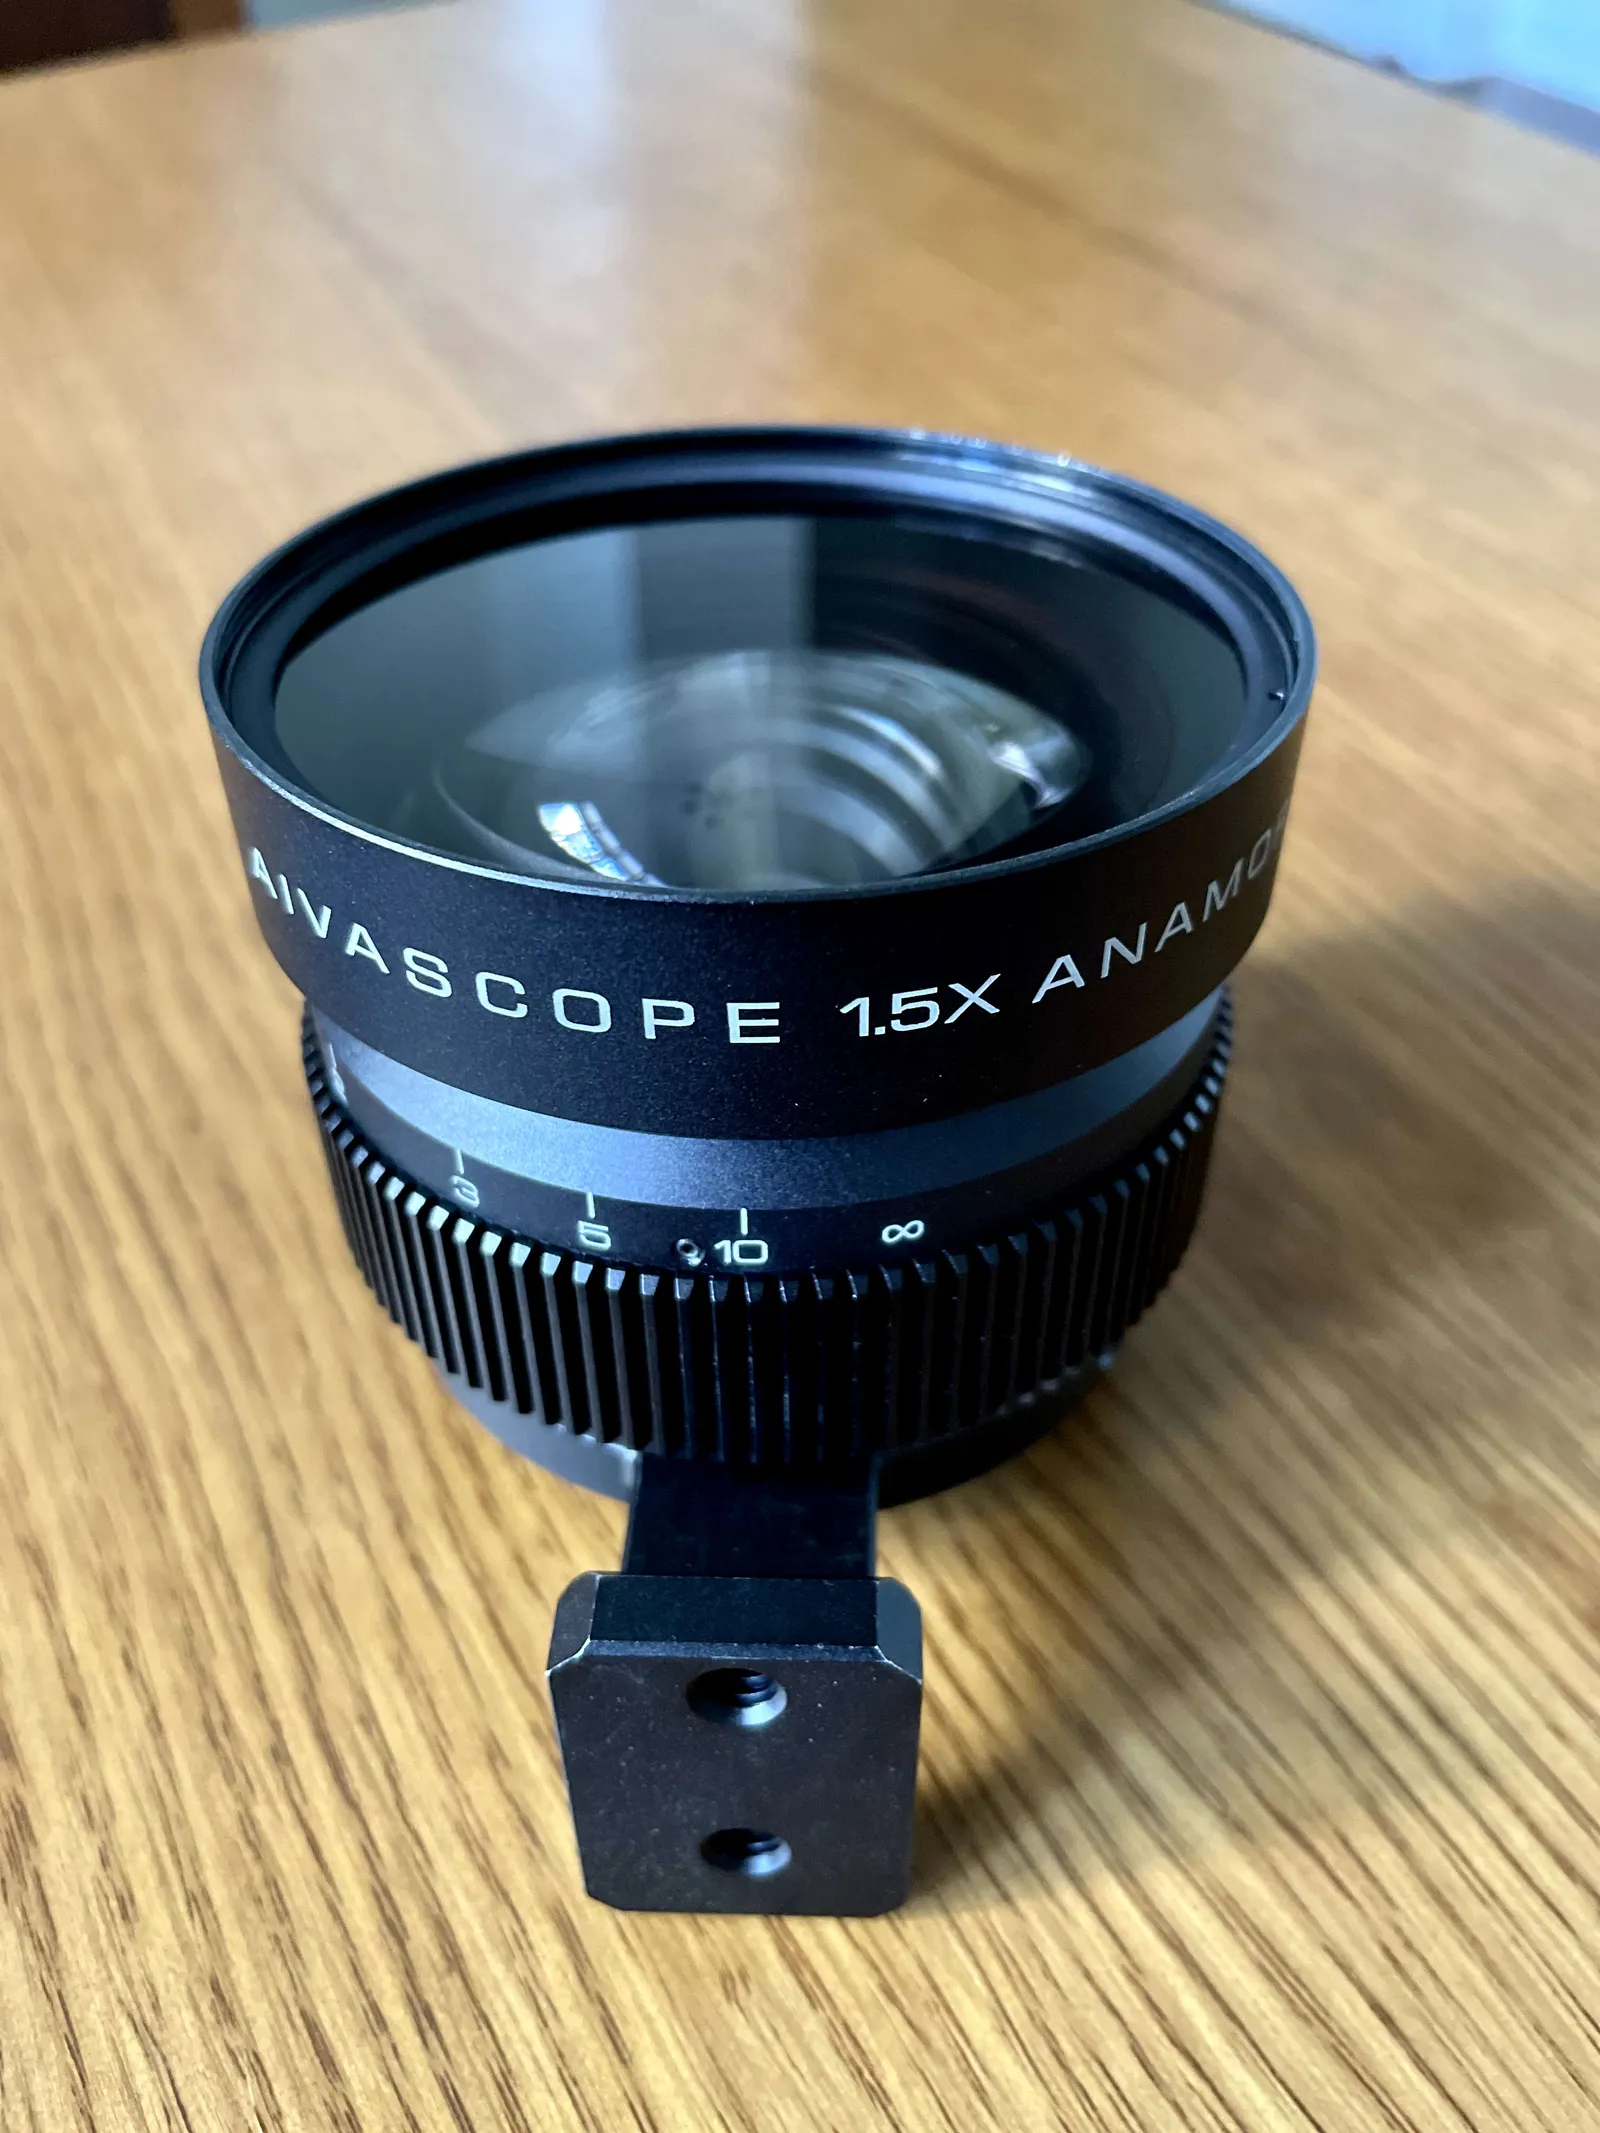  Aivascope 1.5X amber flare anamorphic lens